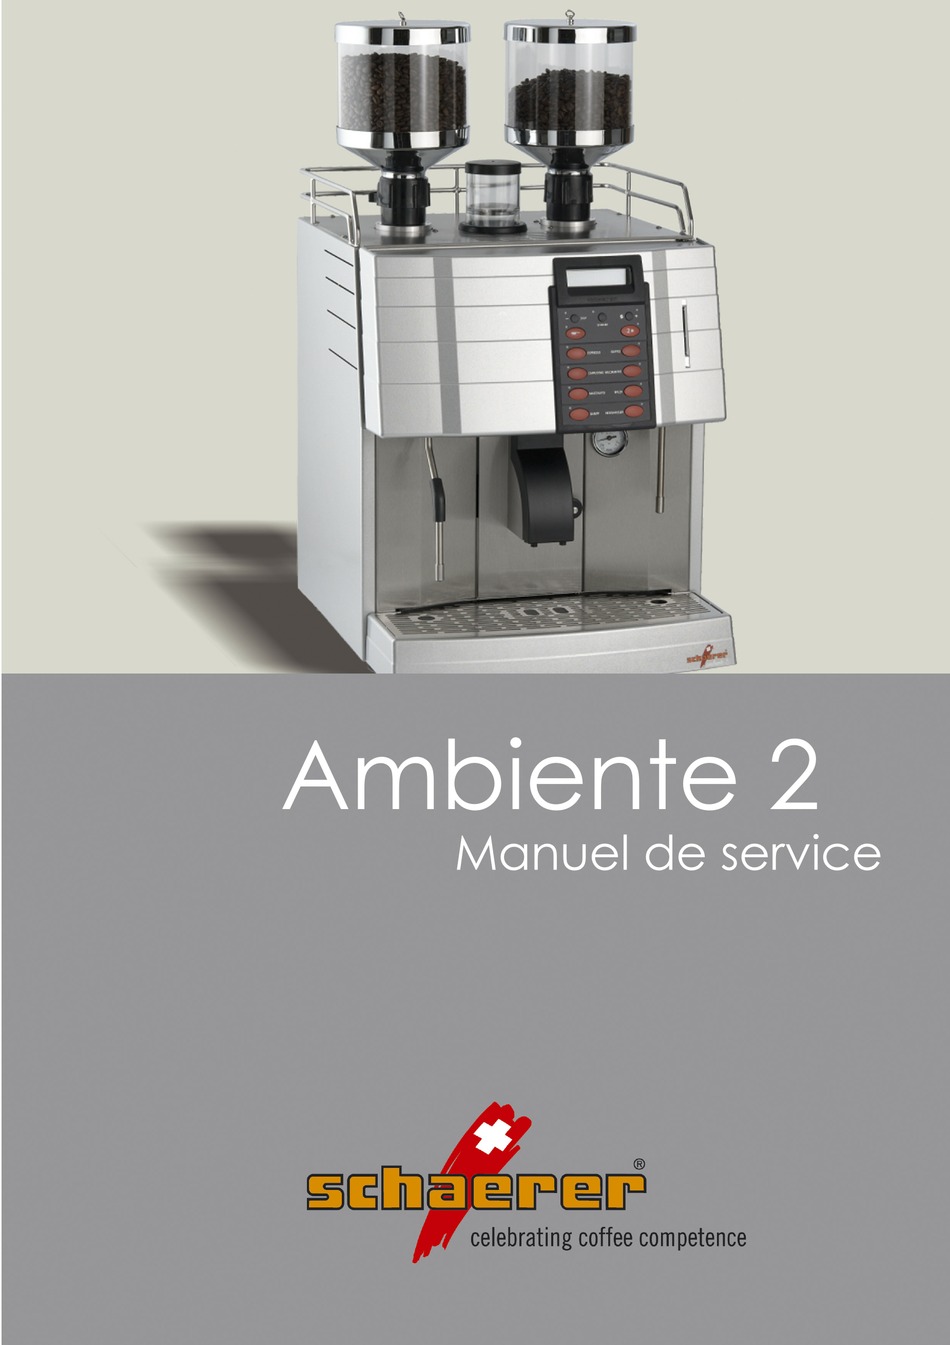 SCHAERER AMBIENTE 2 SERVICE MANUAL Pdf Download | ManualsLib